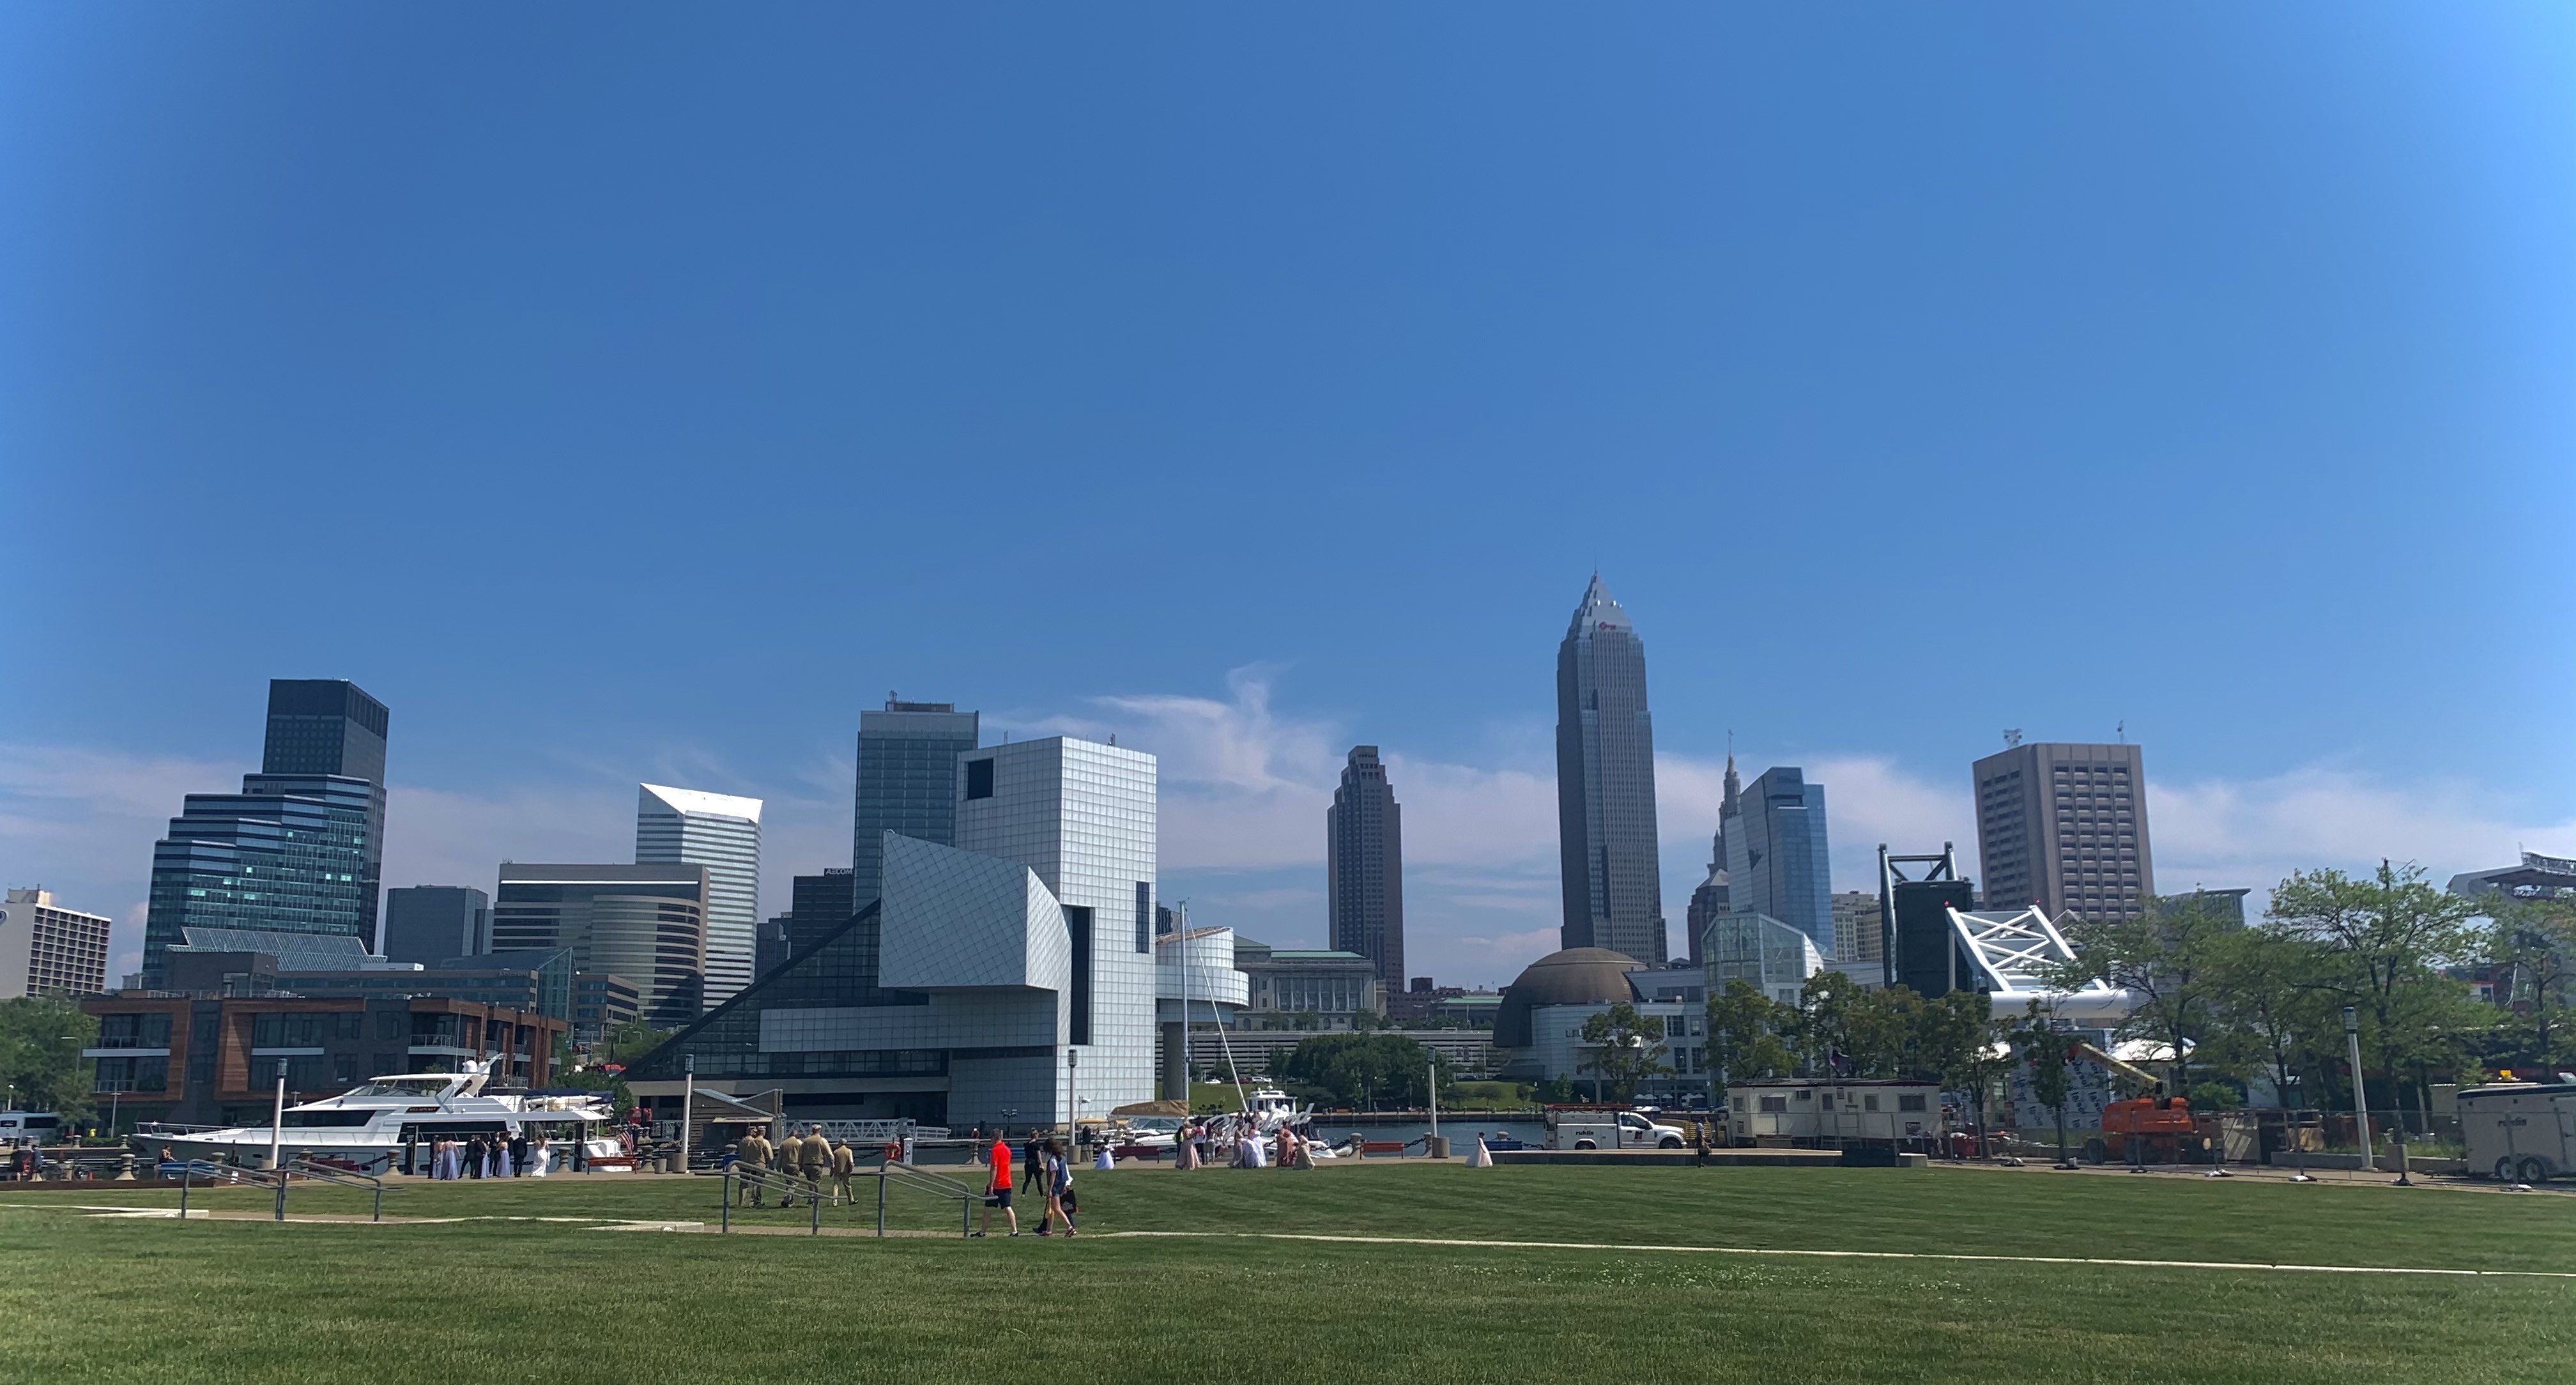 A photo of the Cleveland, Ohio city skyline.